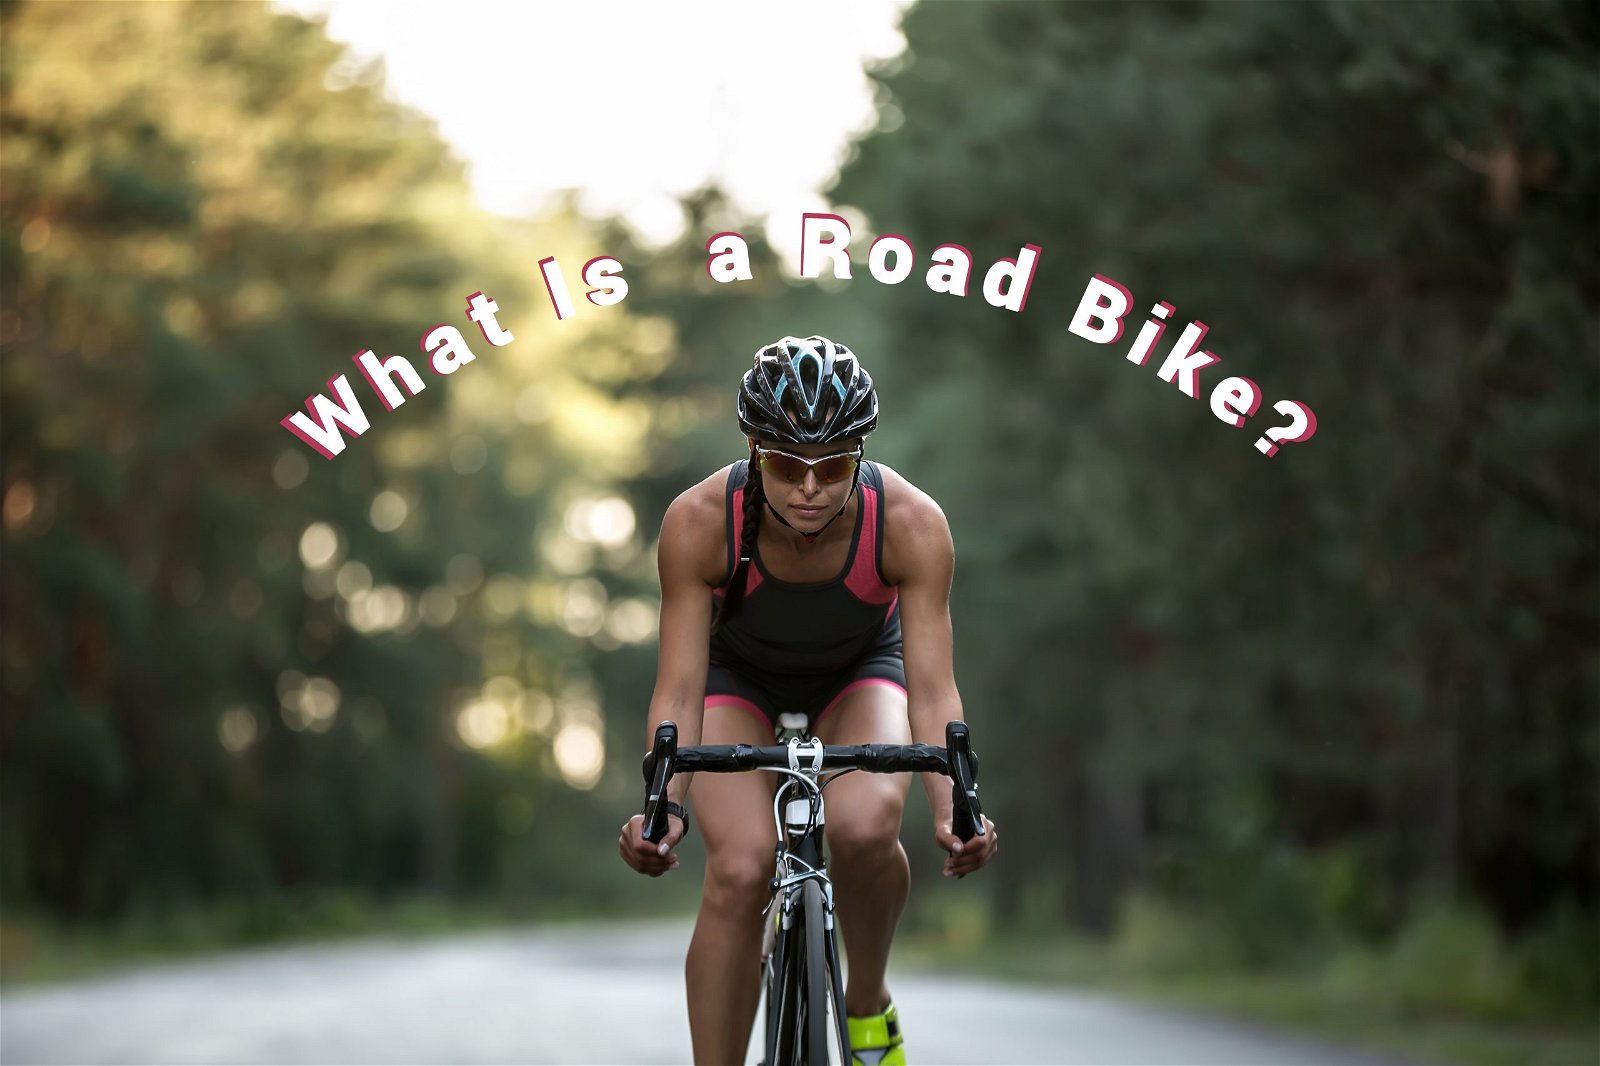 What is a road bike